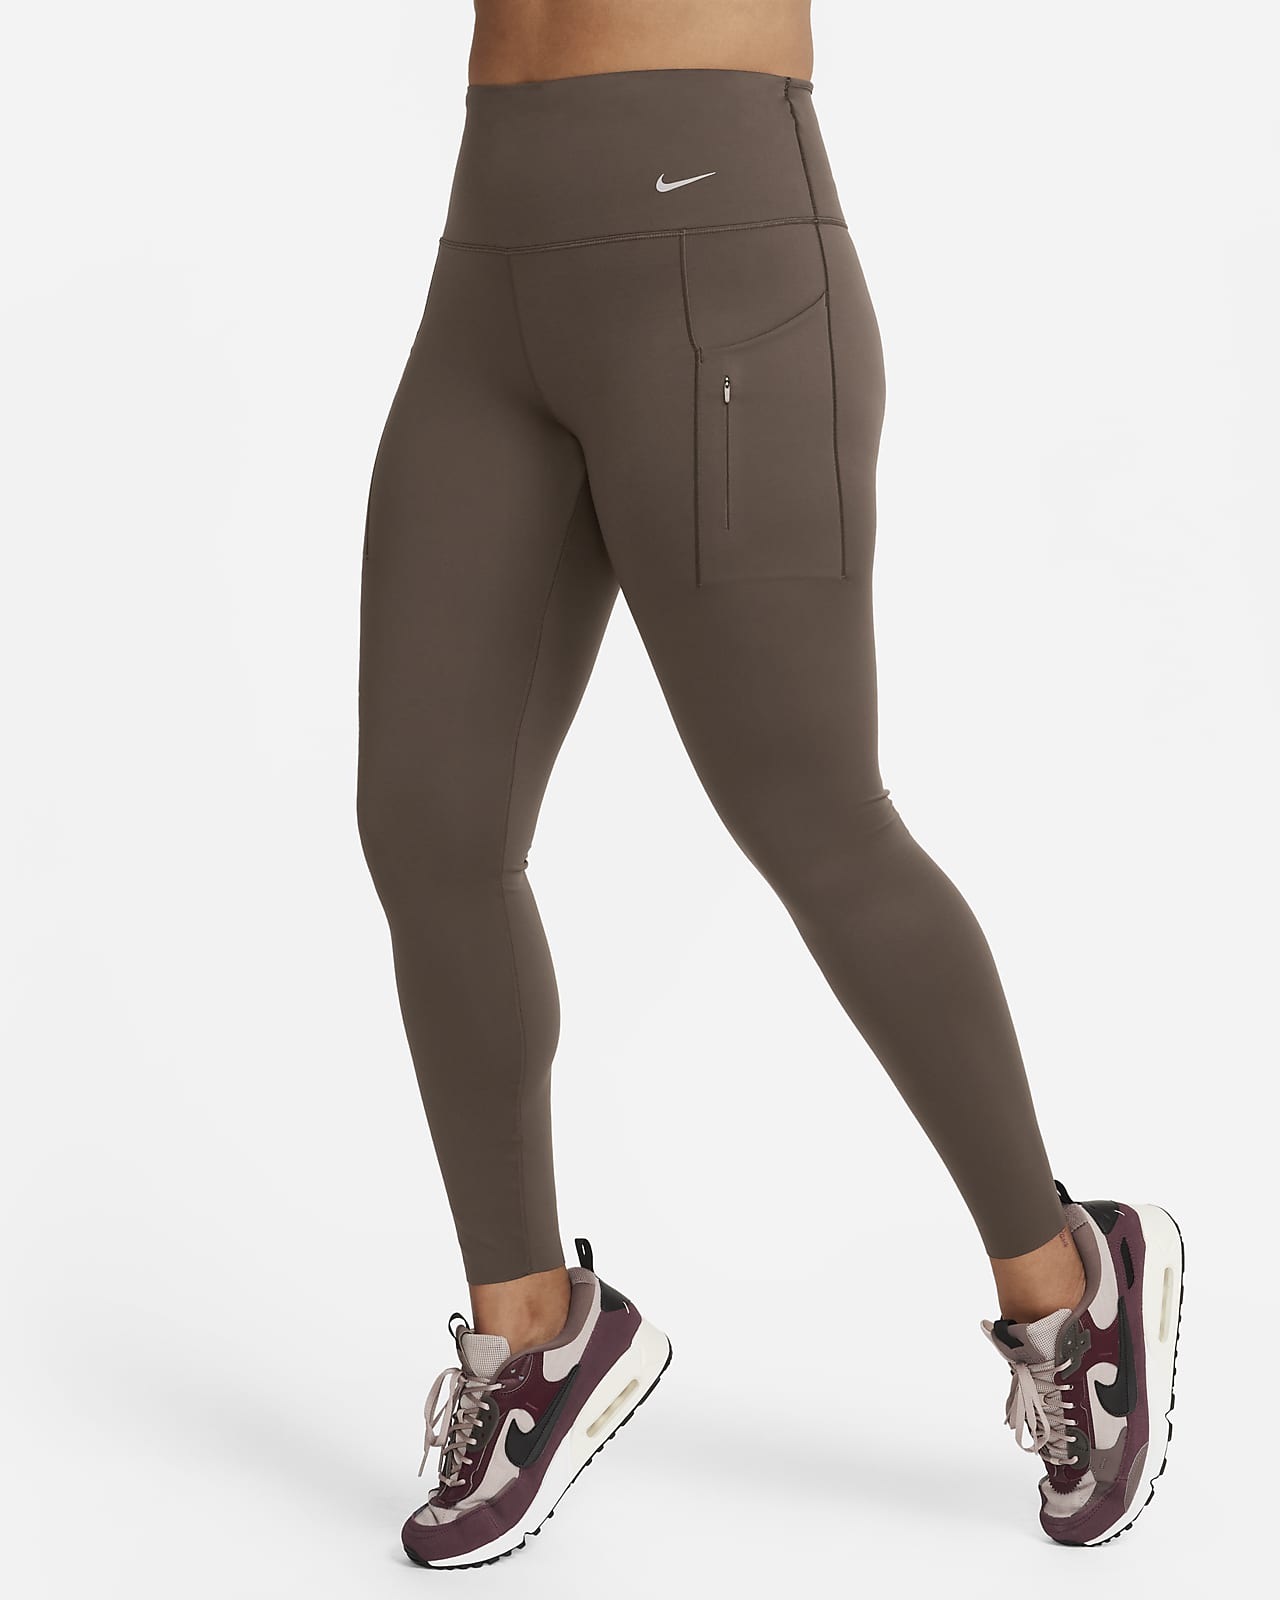 Nike Universa High Waist 7/8 Leggings w/ Pockets - Women's Small $120  DQ5897 536 | eBay